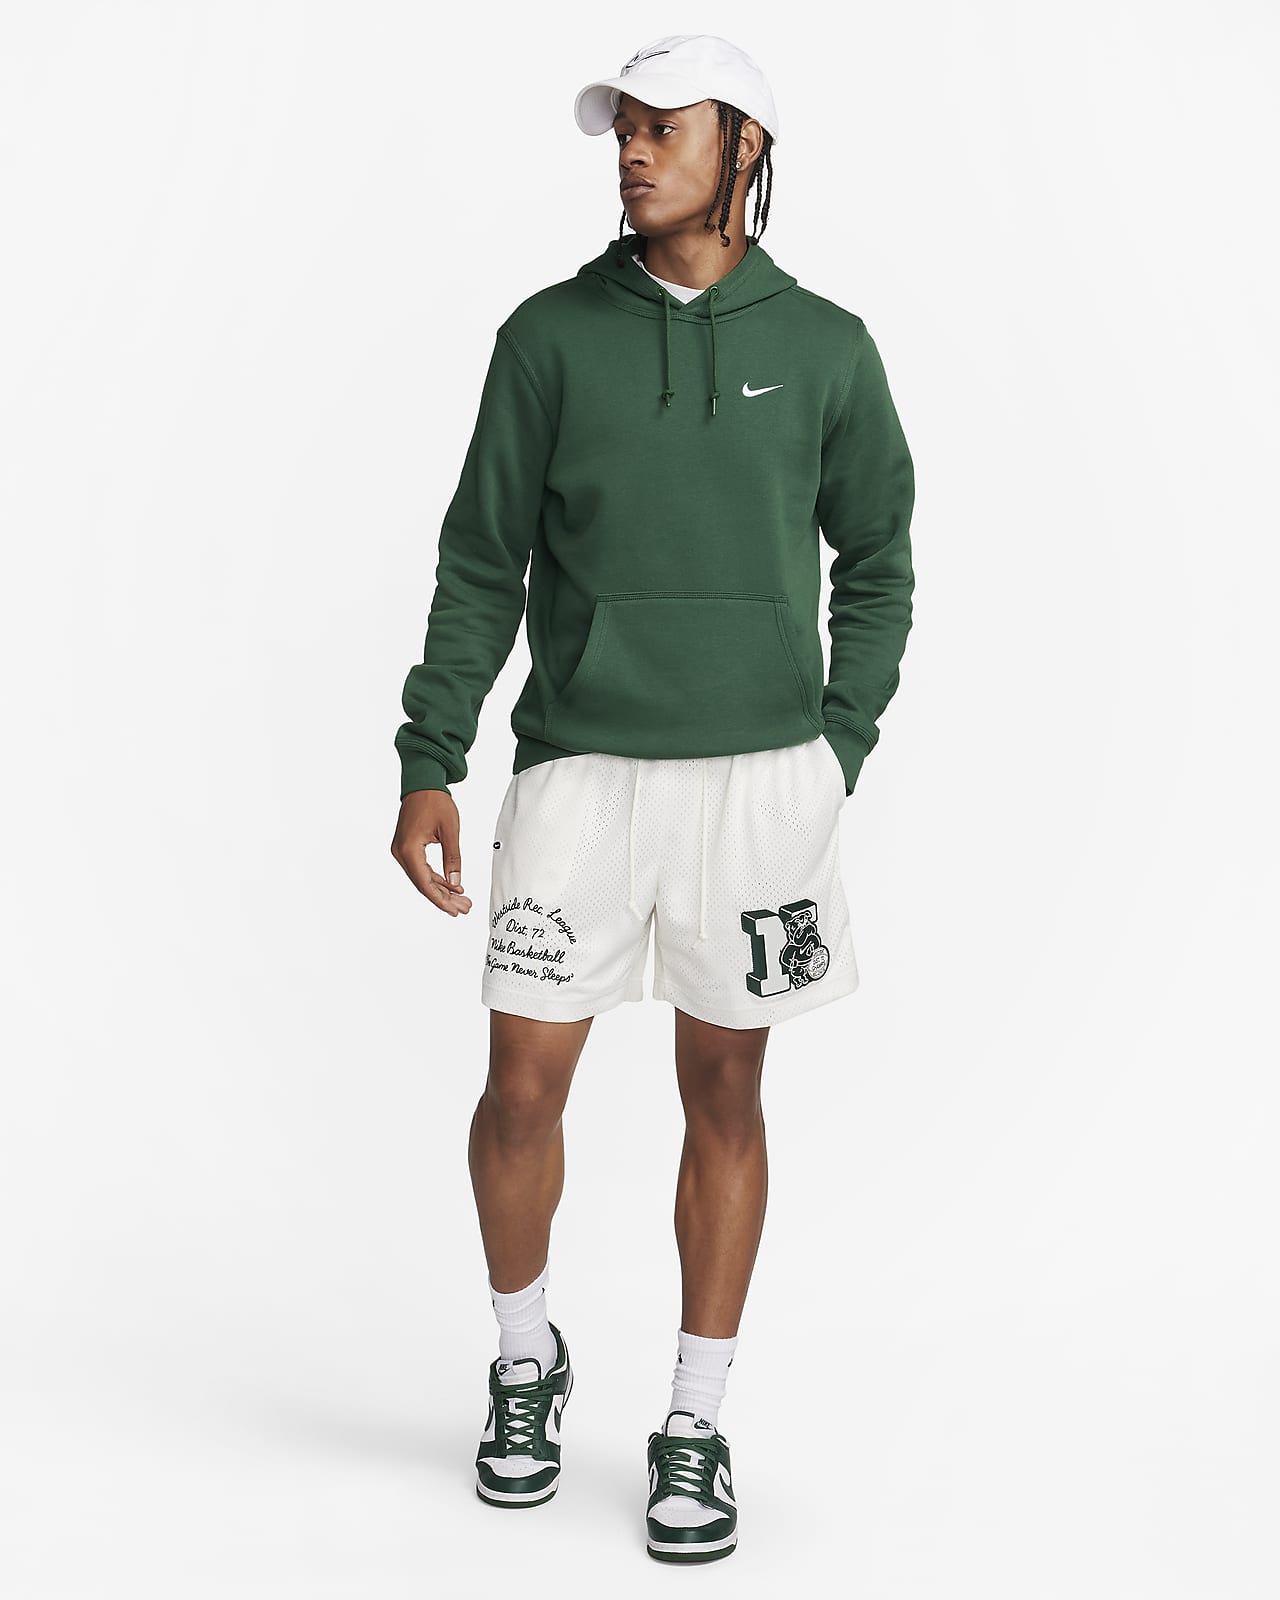 Nike Men\'s Shorts. Authentics Mesh